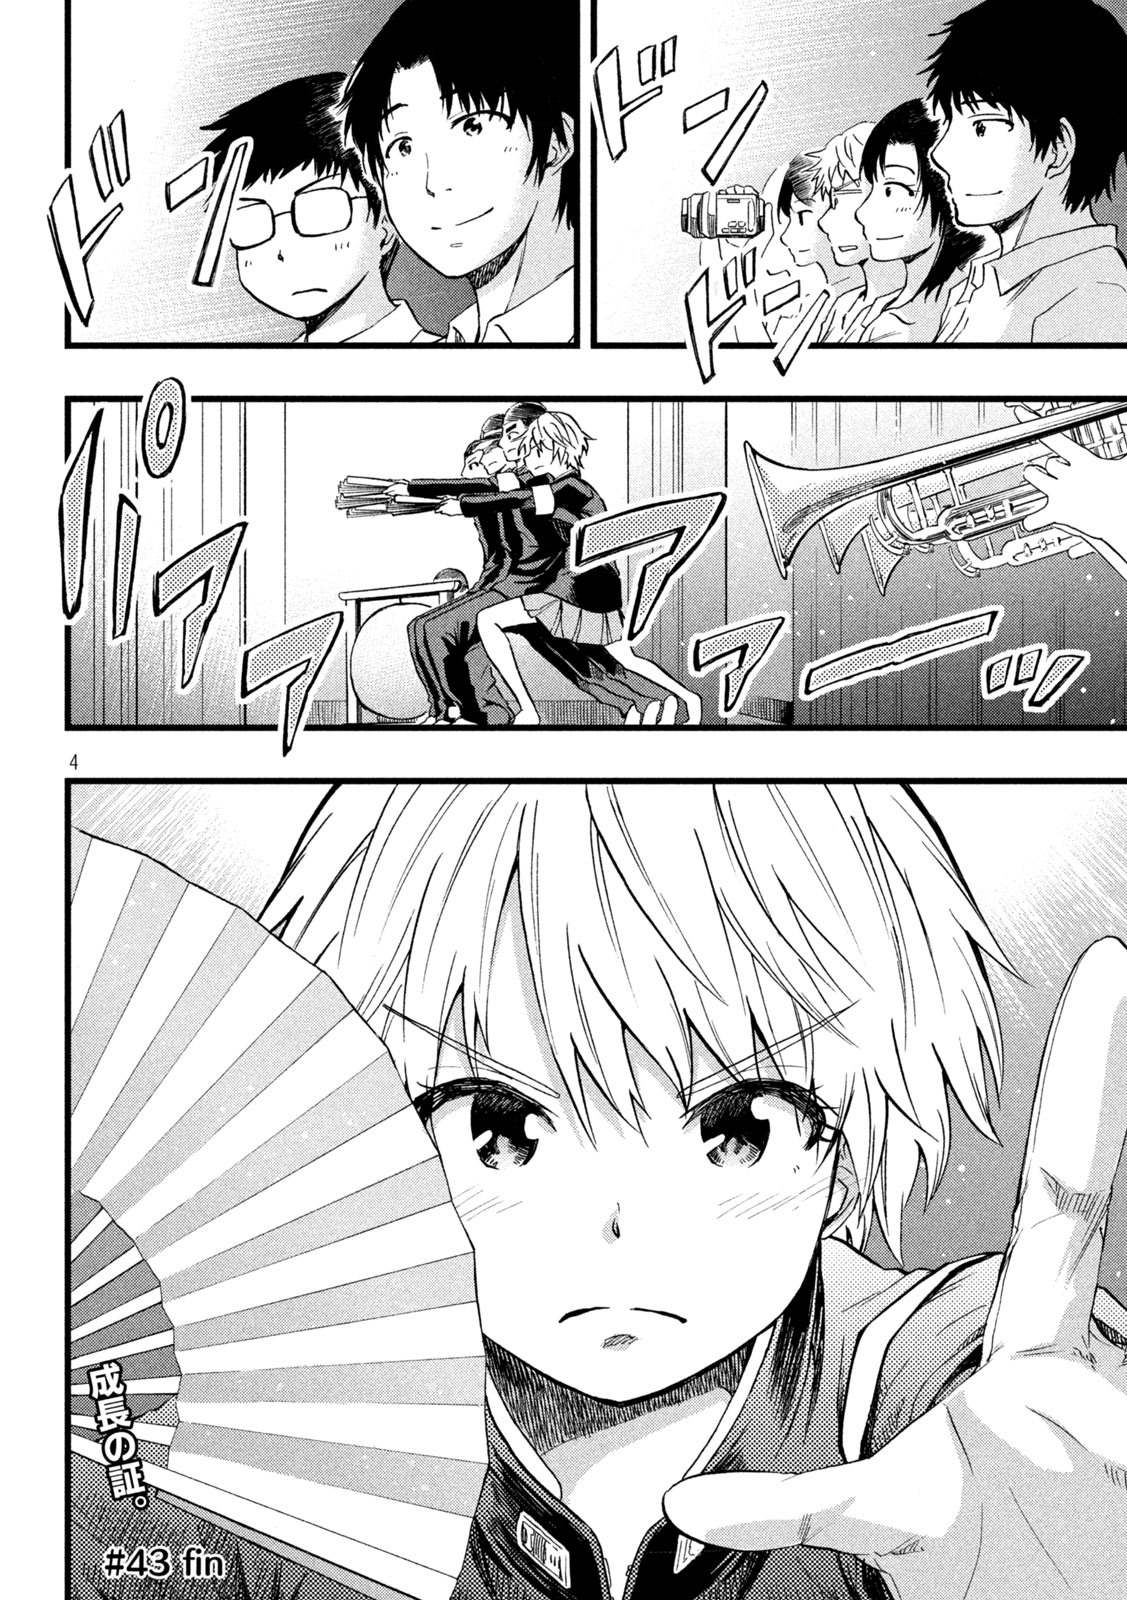 Koharu haru! - Chapter 43 - Page 4